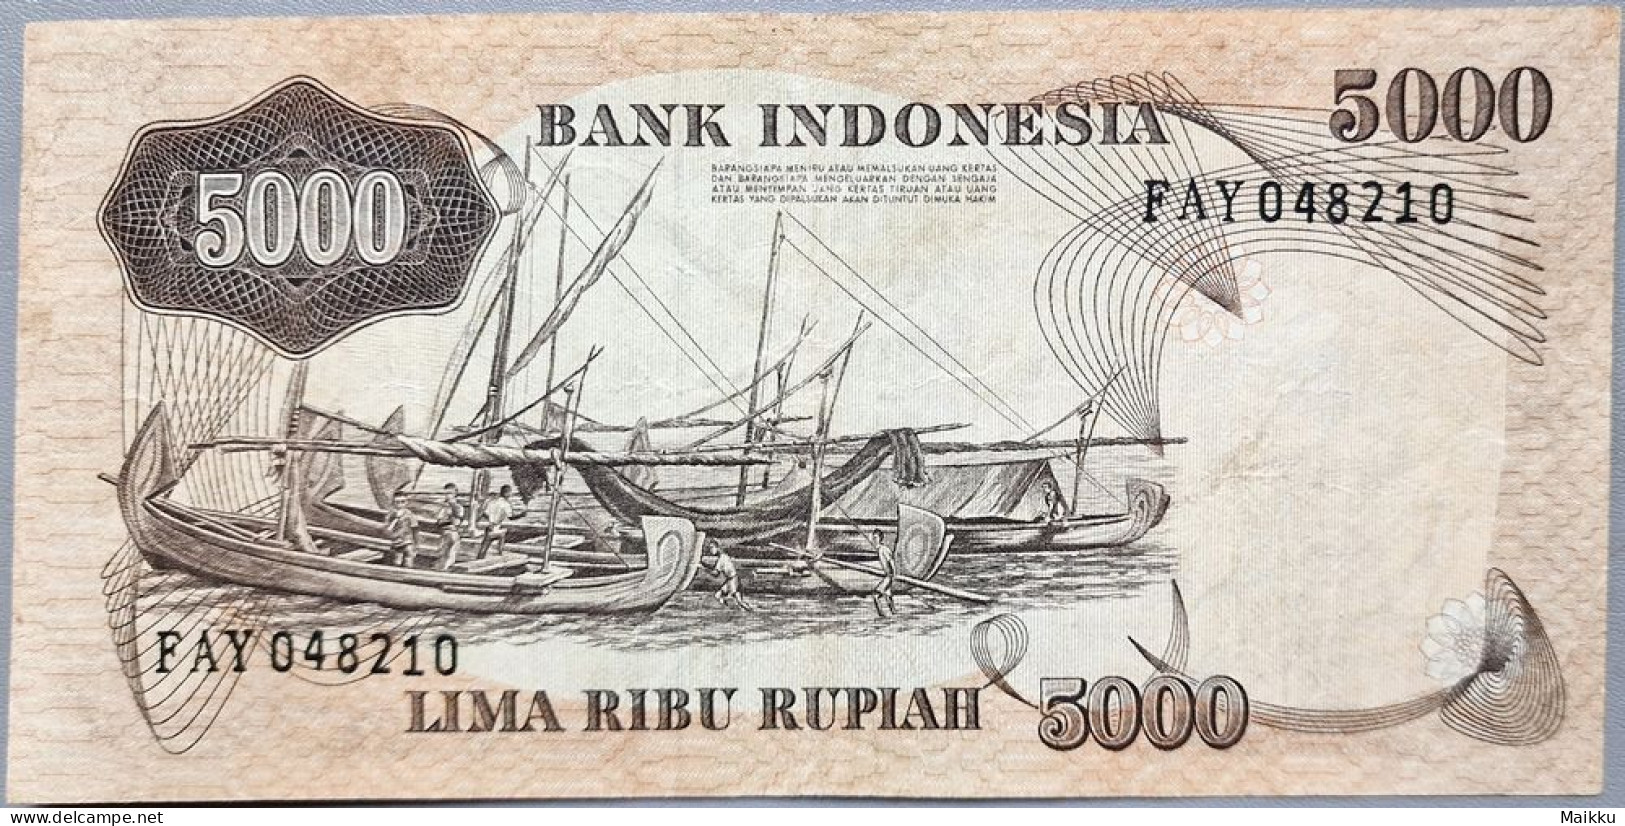 Indonesia 5000 Rupiah 1975 P-114 VF+ (circulated) - Indonesien